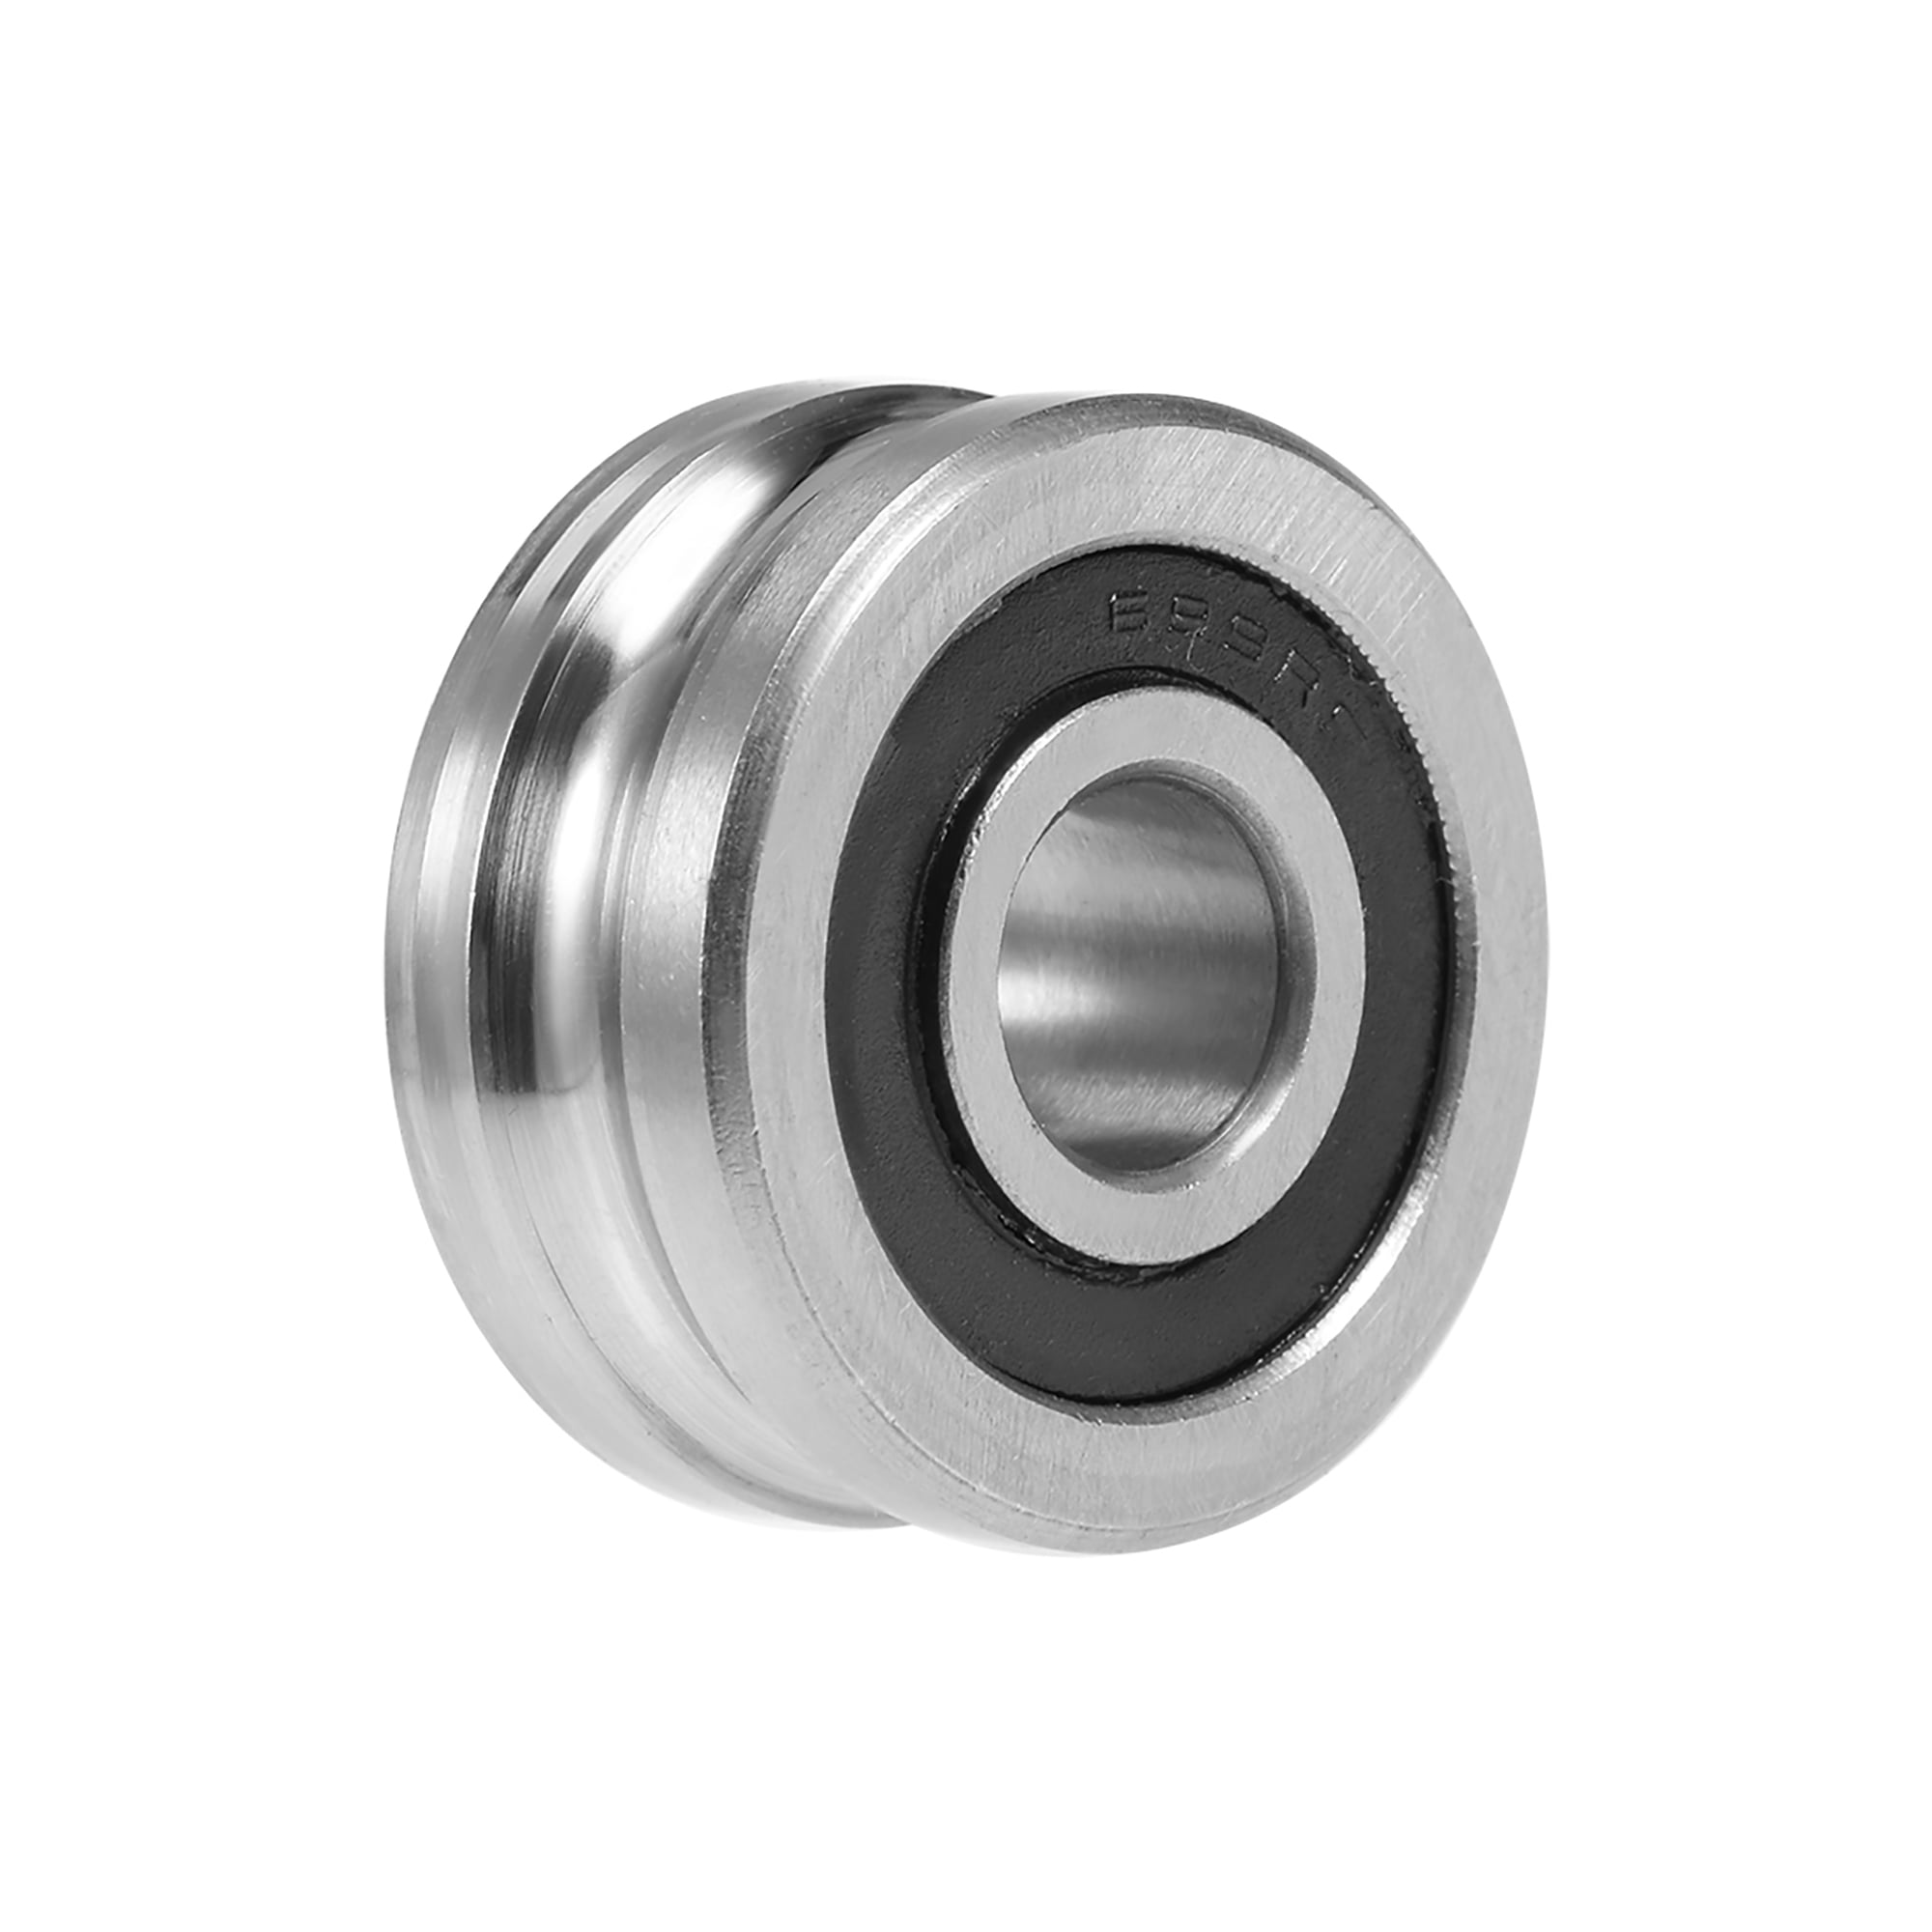 0.236 inch 2pcs 6mm U Groove Plastic pulley bearings 6*32*10 mm bearing 